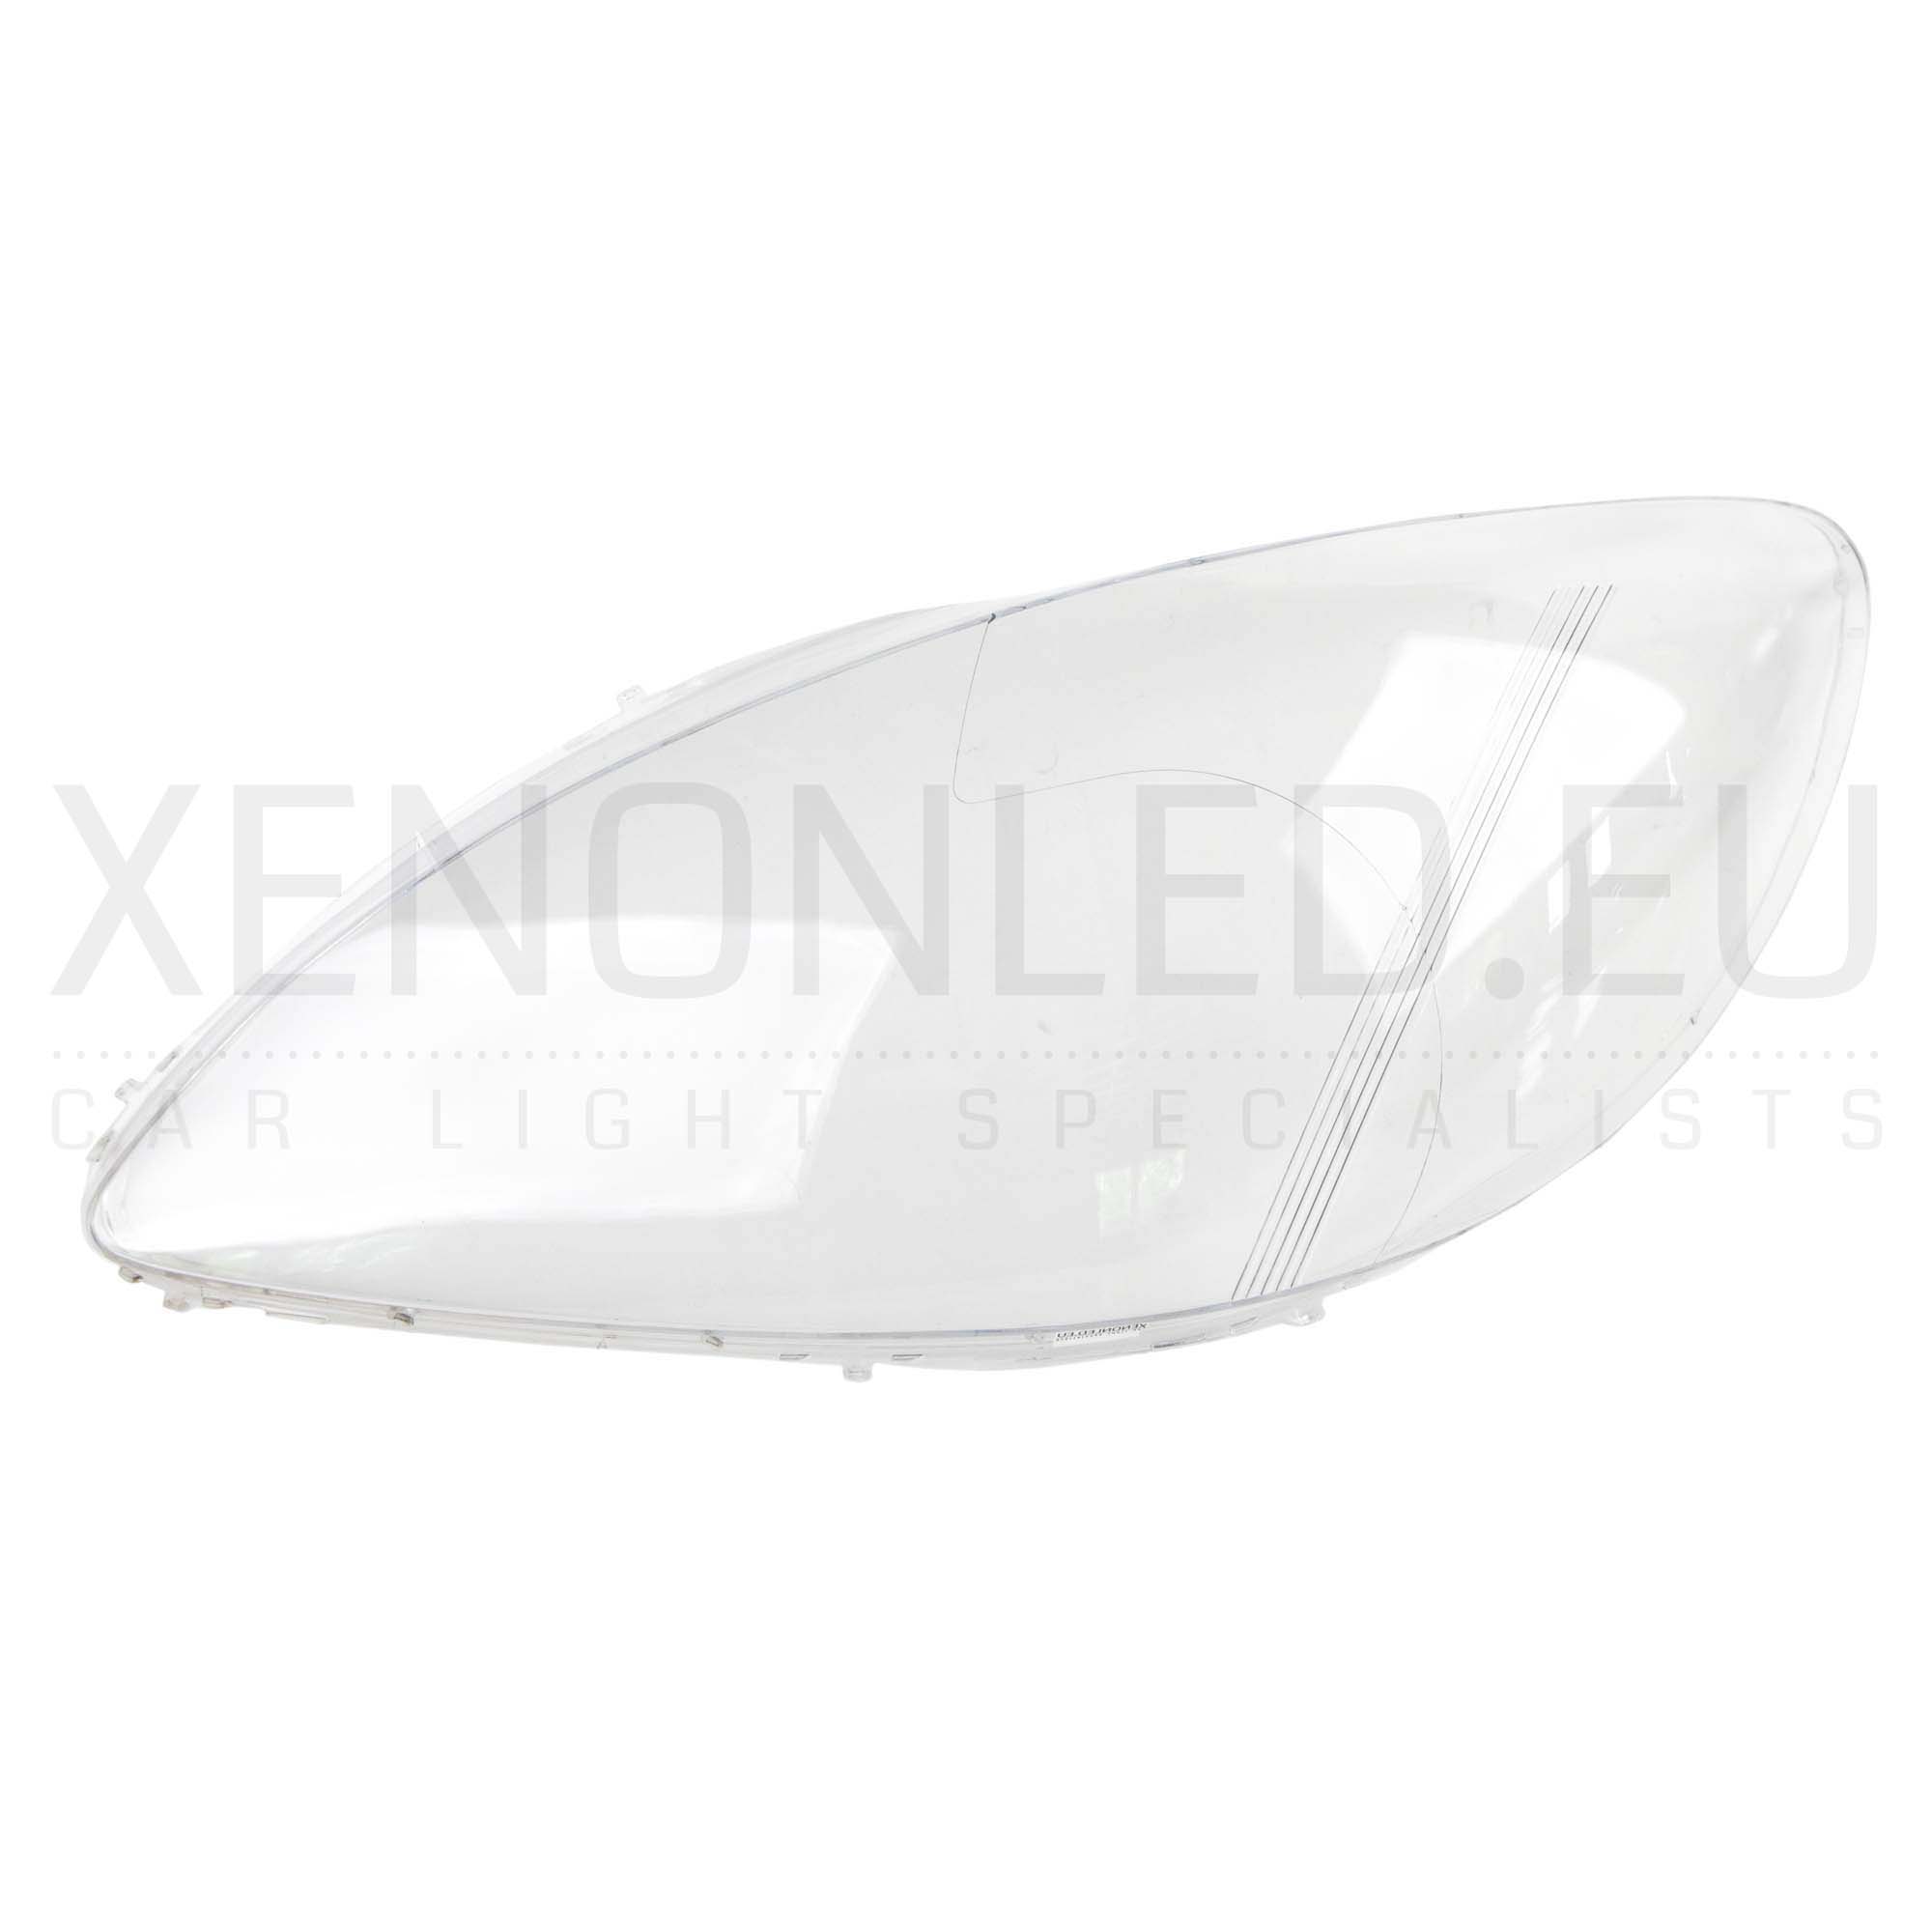 Mercedes - Benz Vito 2003 – 2010 Headlight Lens Cover Left Side ...